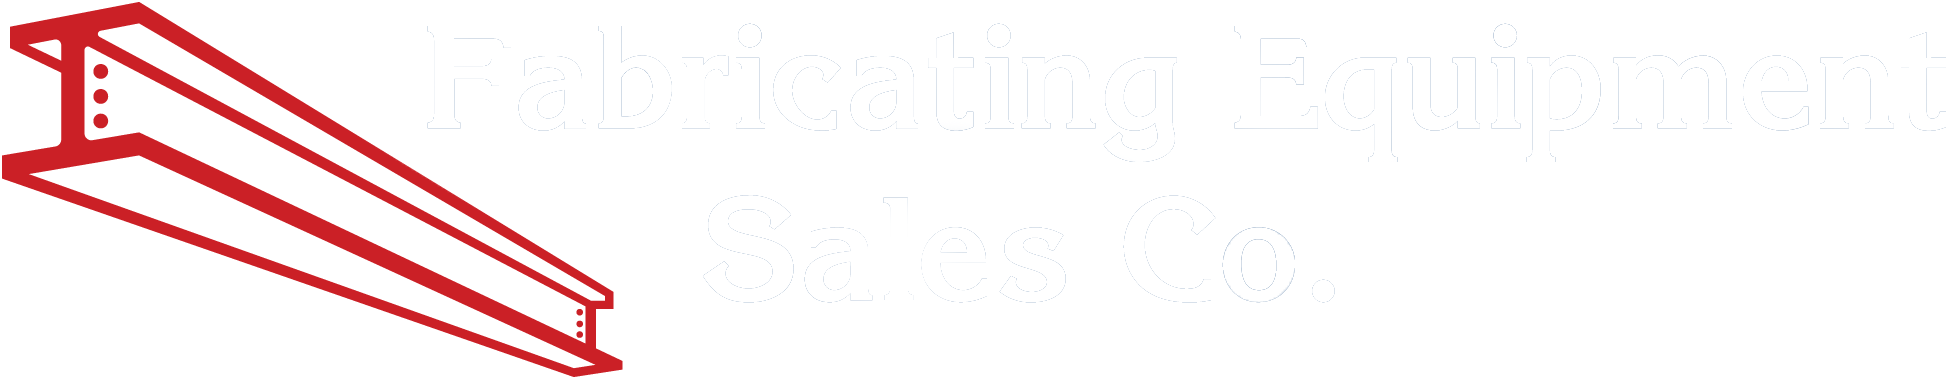 Fabricating Equipment Sales Co. Logo 2